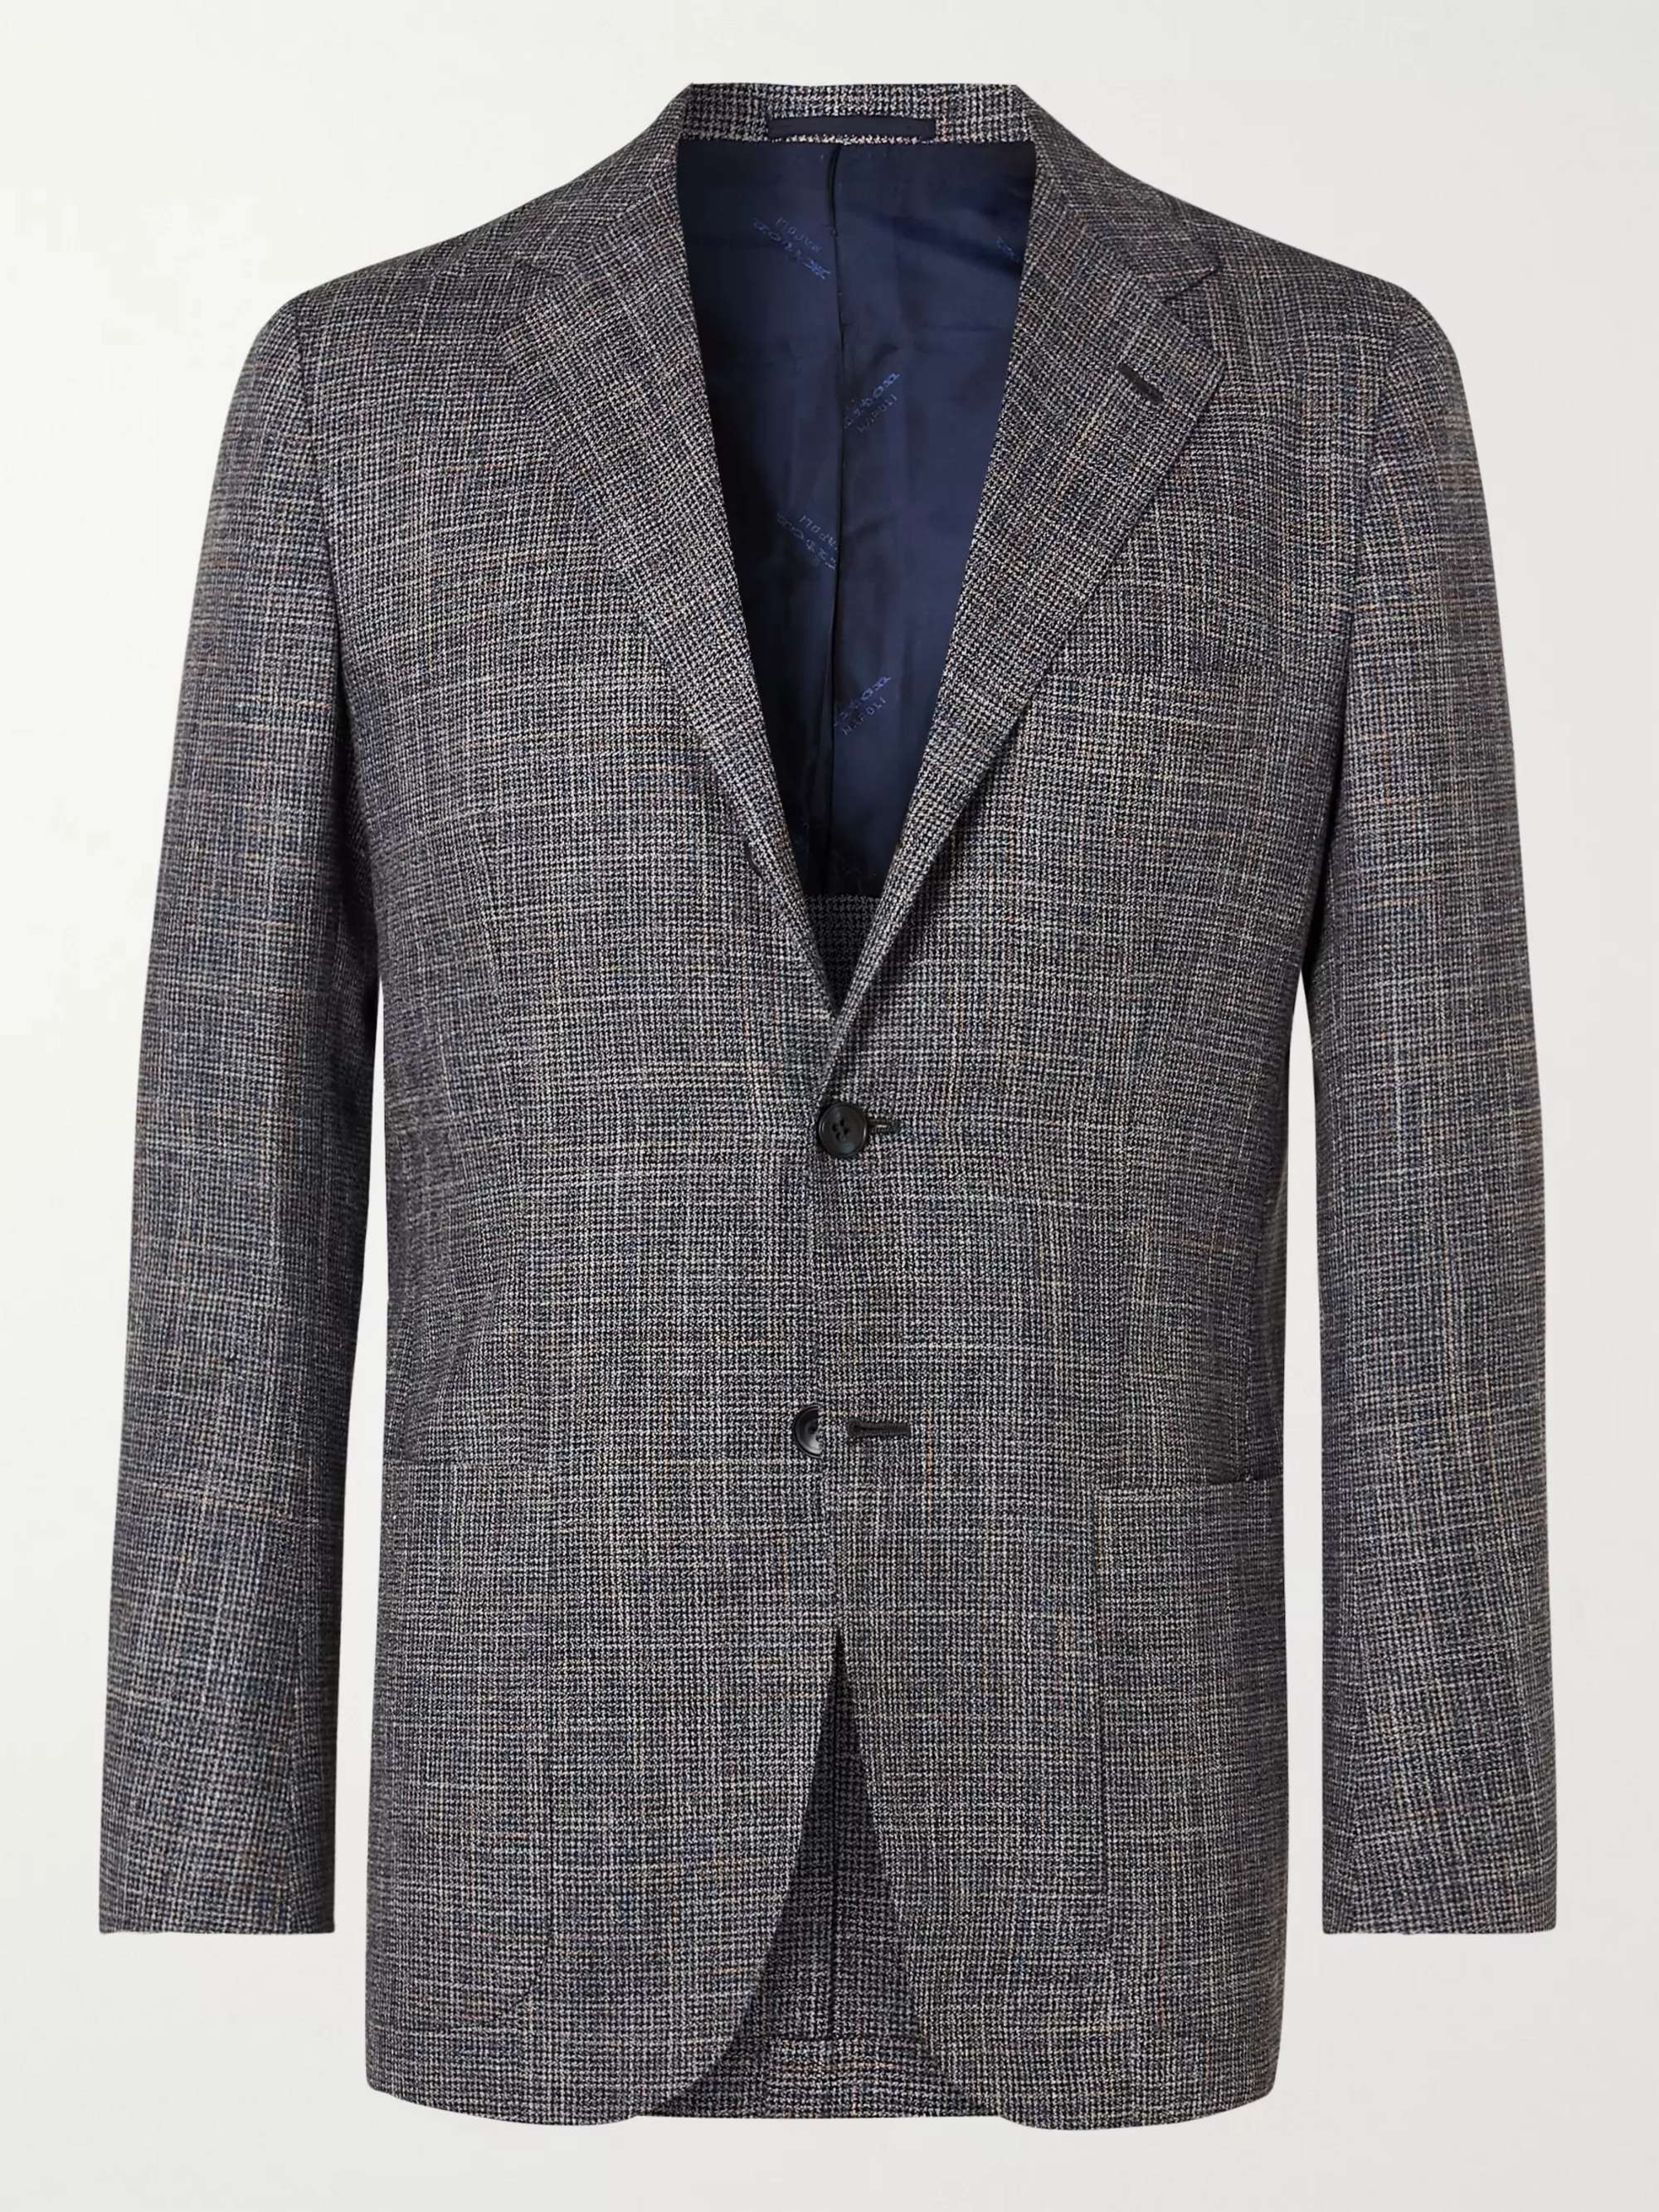 KITON Puppytooth Cashmere, Virgin Wool, Silk and Linen-Blend Suit Jacket